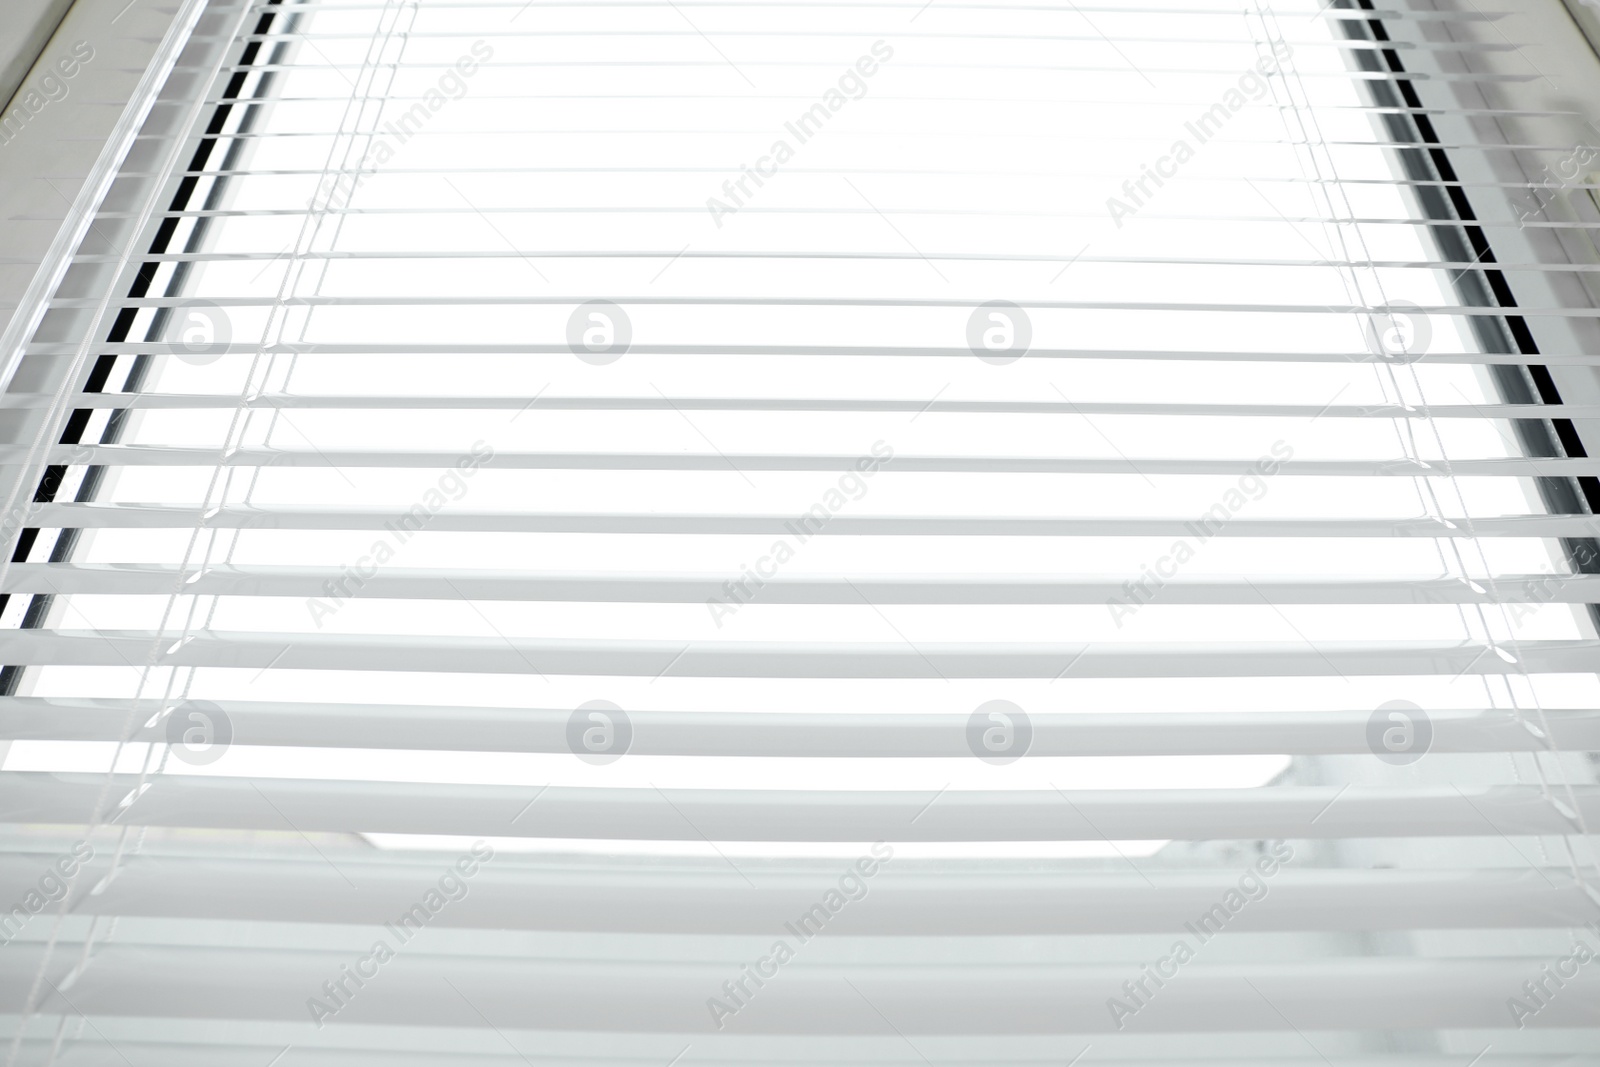 Photo of Stylish horizontal window blinds, low angle view